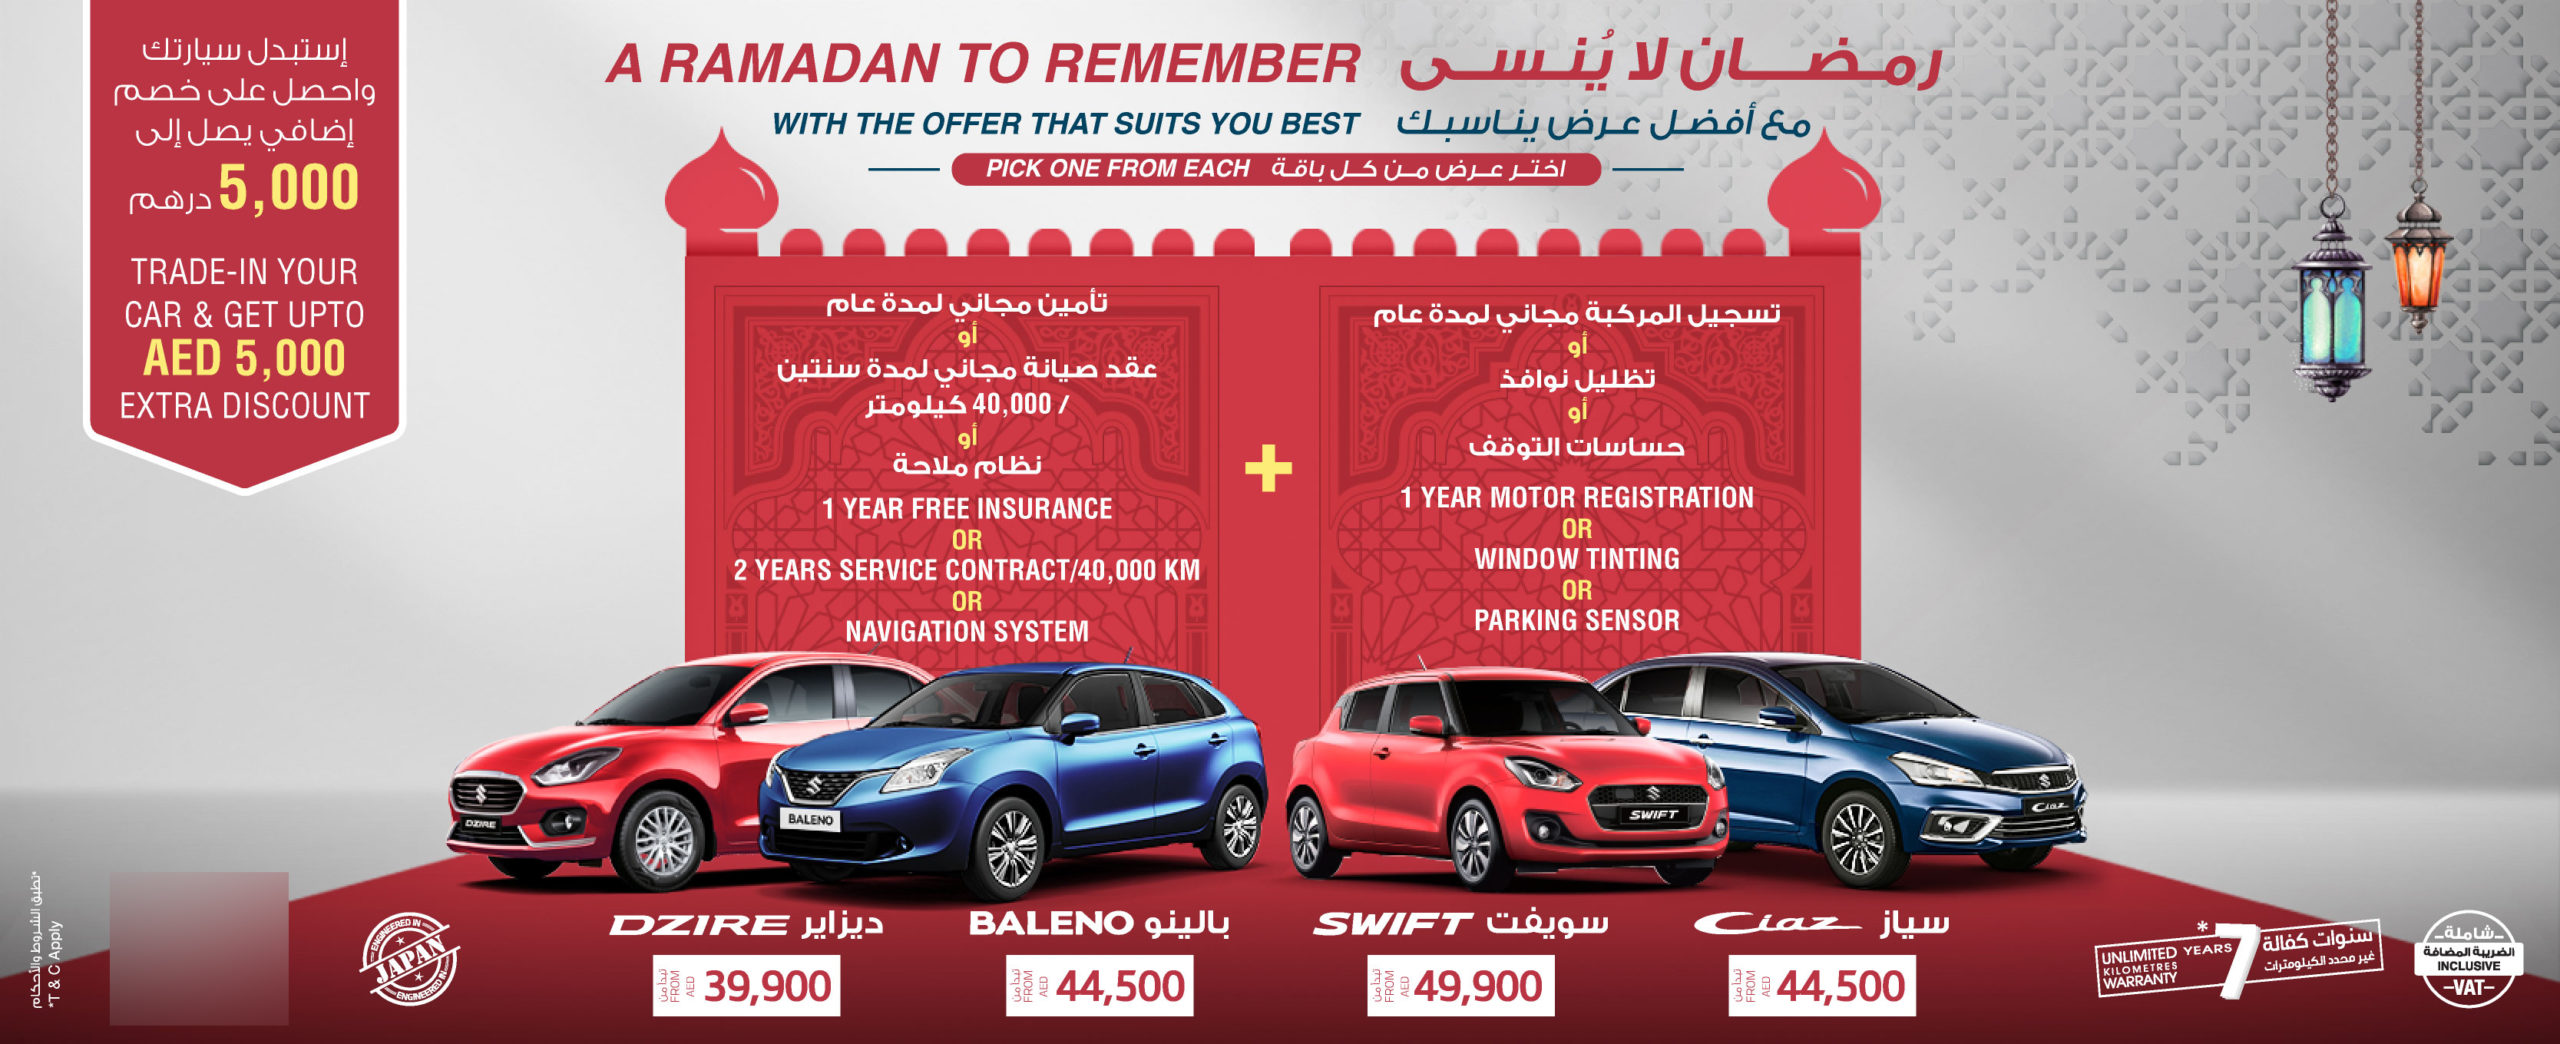 2020 Suzuki Ramadan Deals